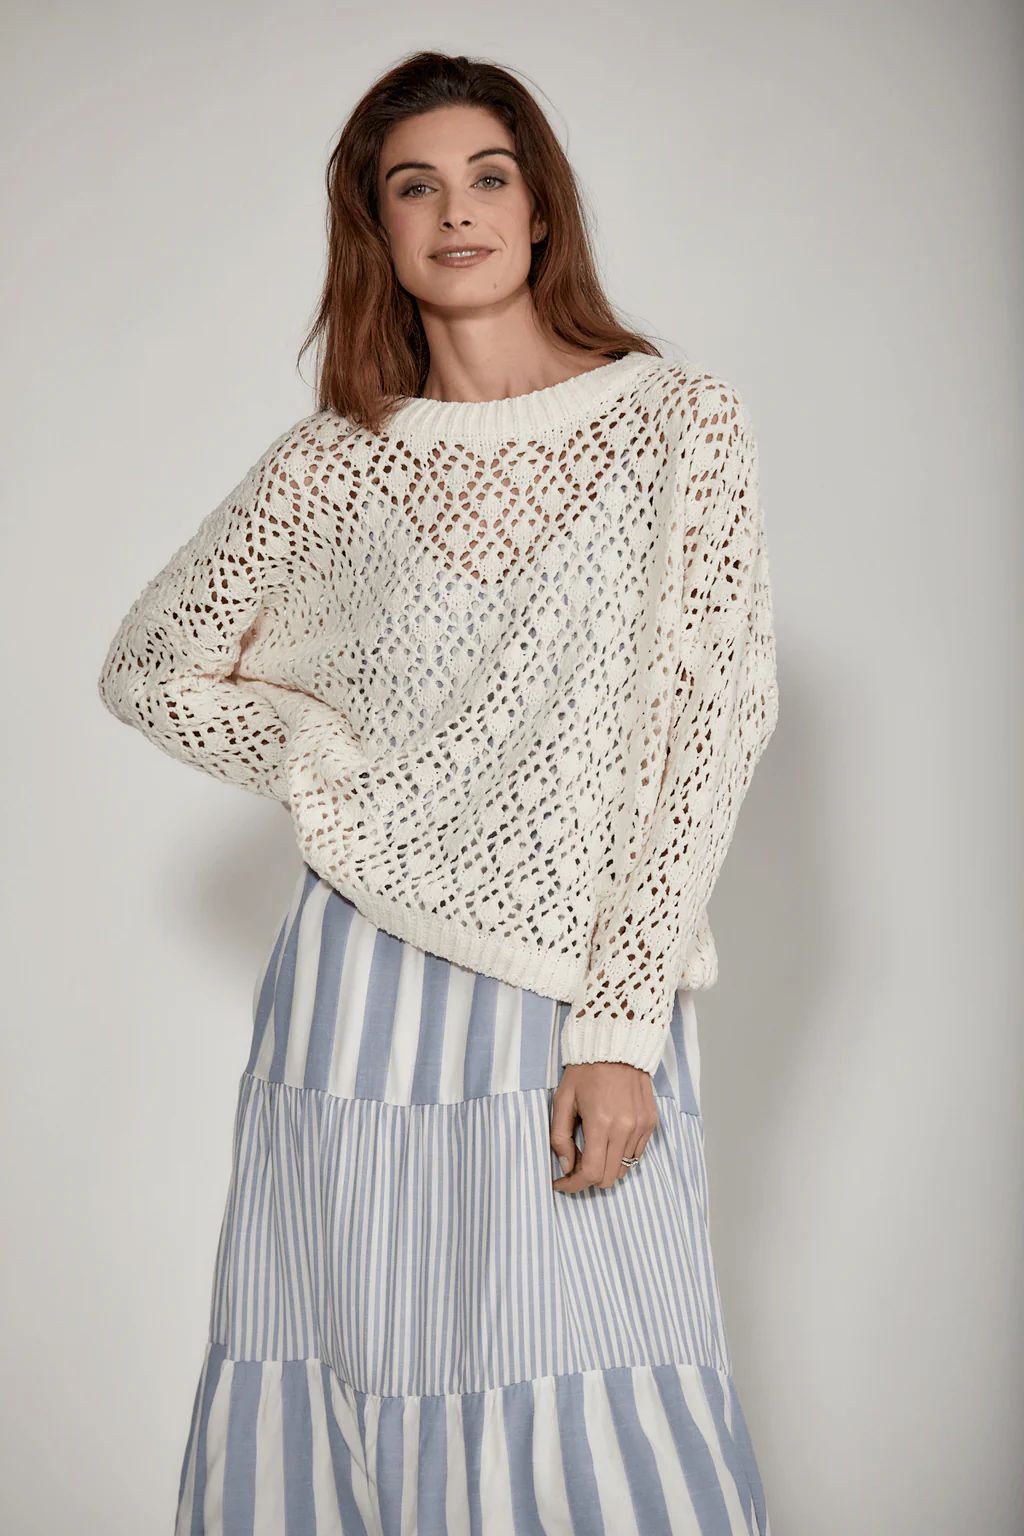 Molly Bracken Chenille Crochet Sweater | Social Threads